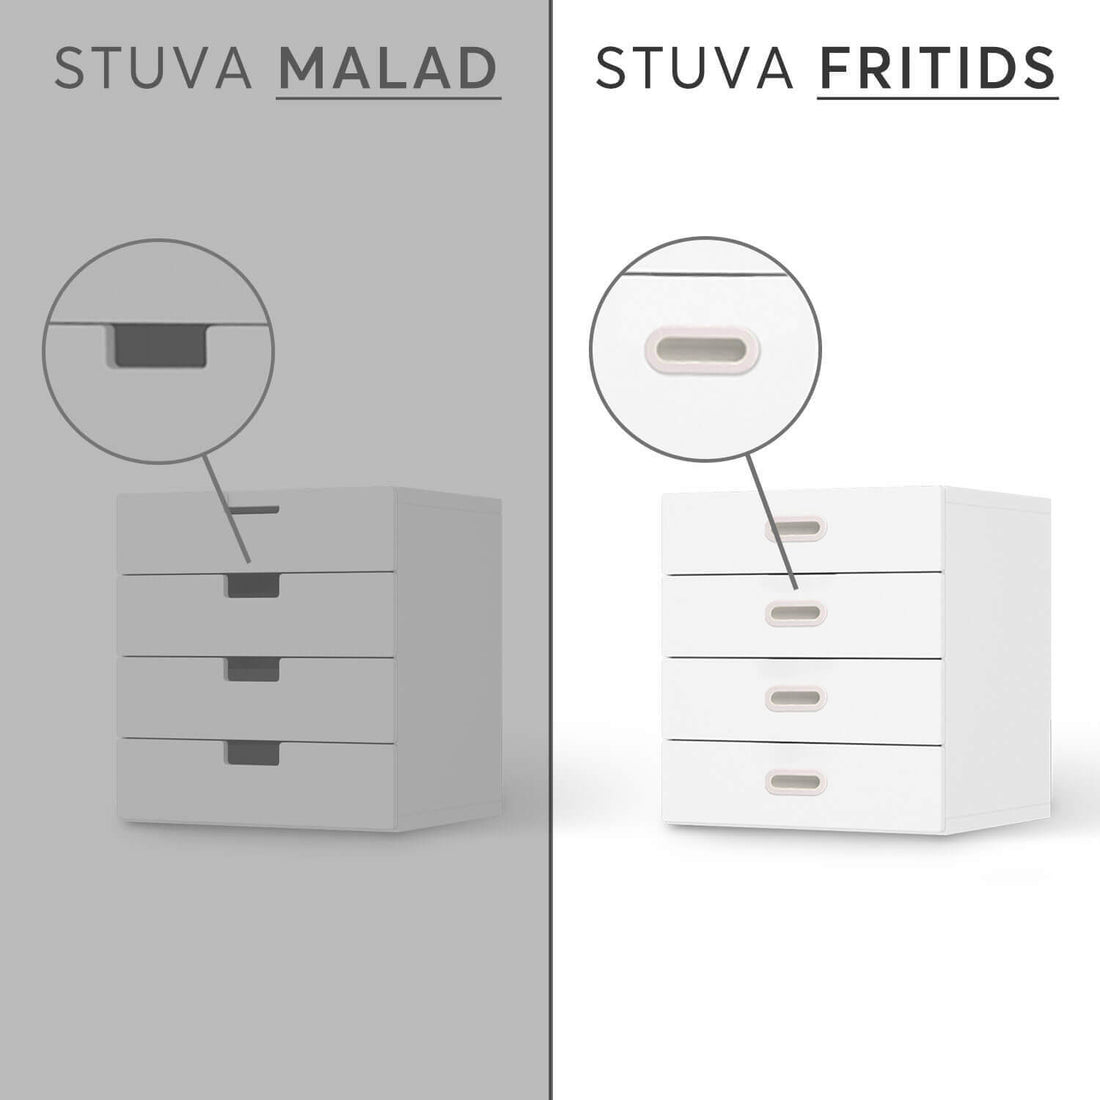 Vergleich IKEA Stuva Fritids / Malad - Elefanten